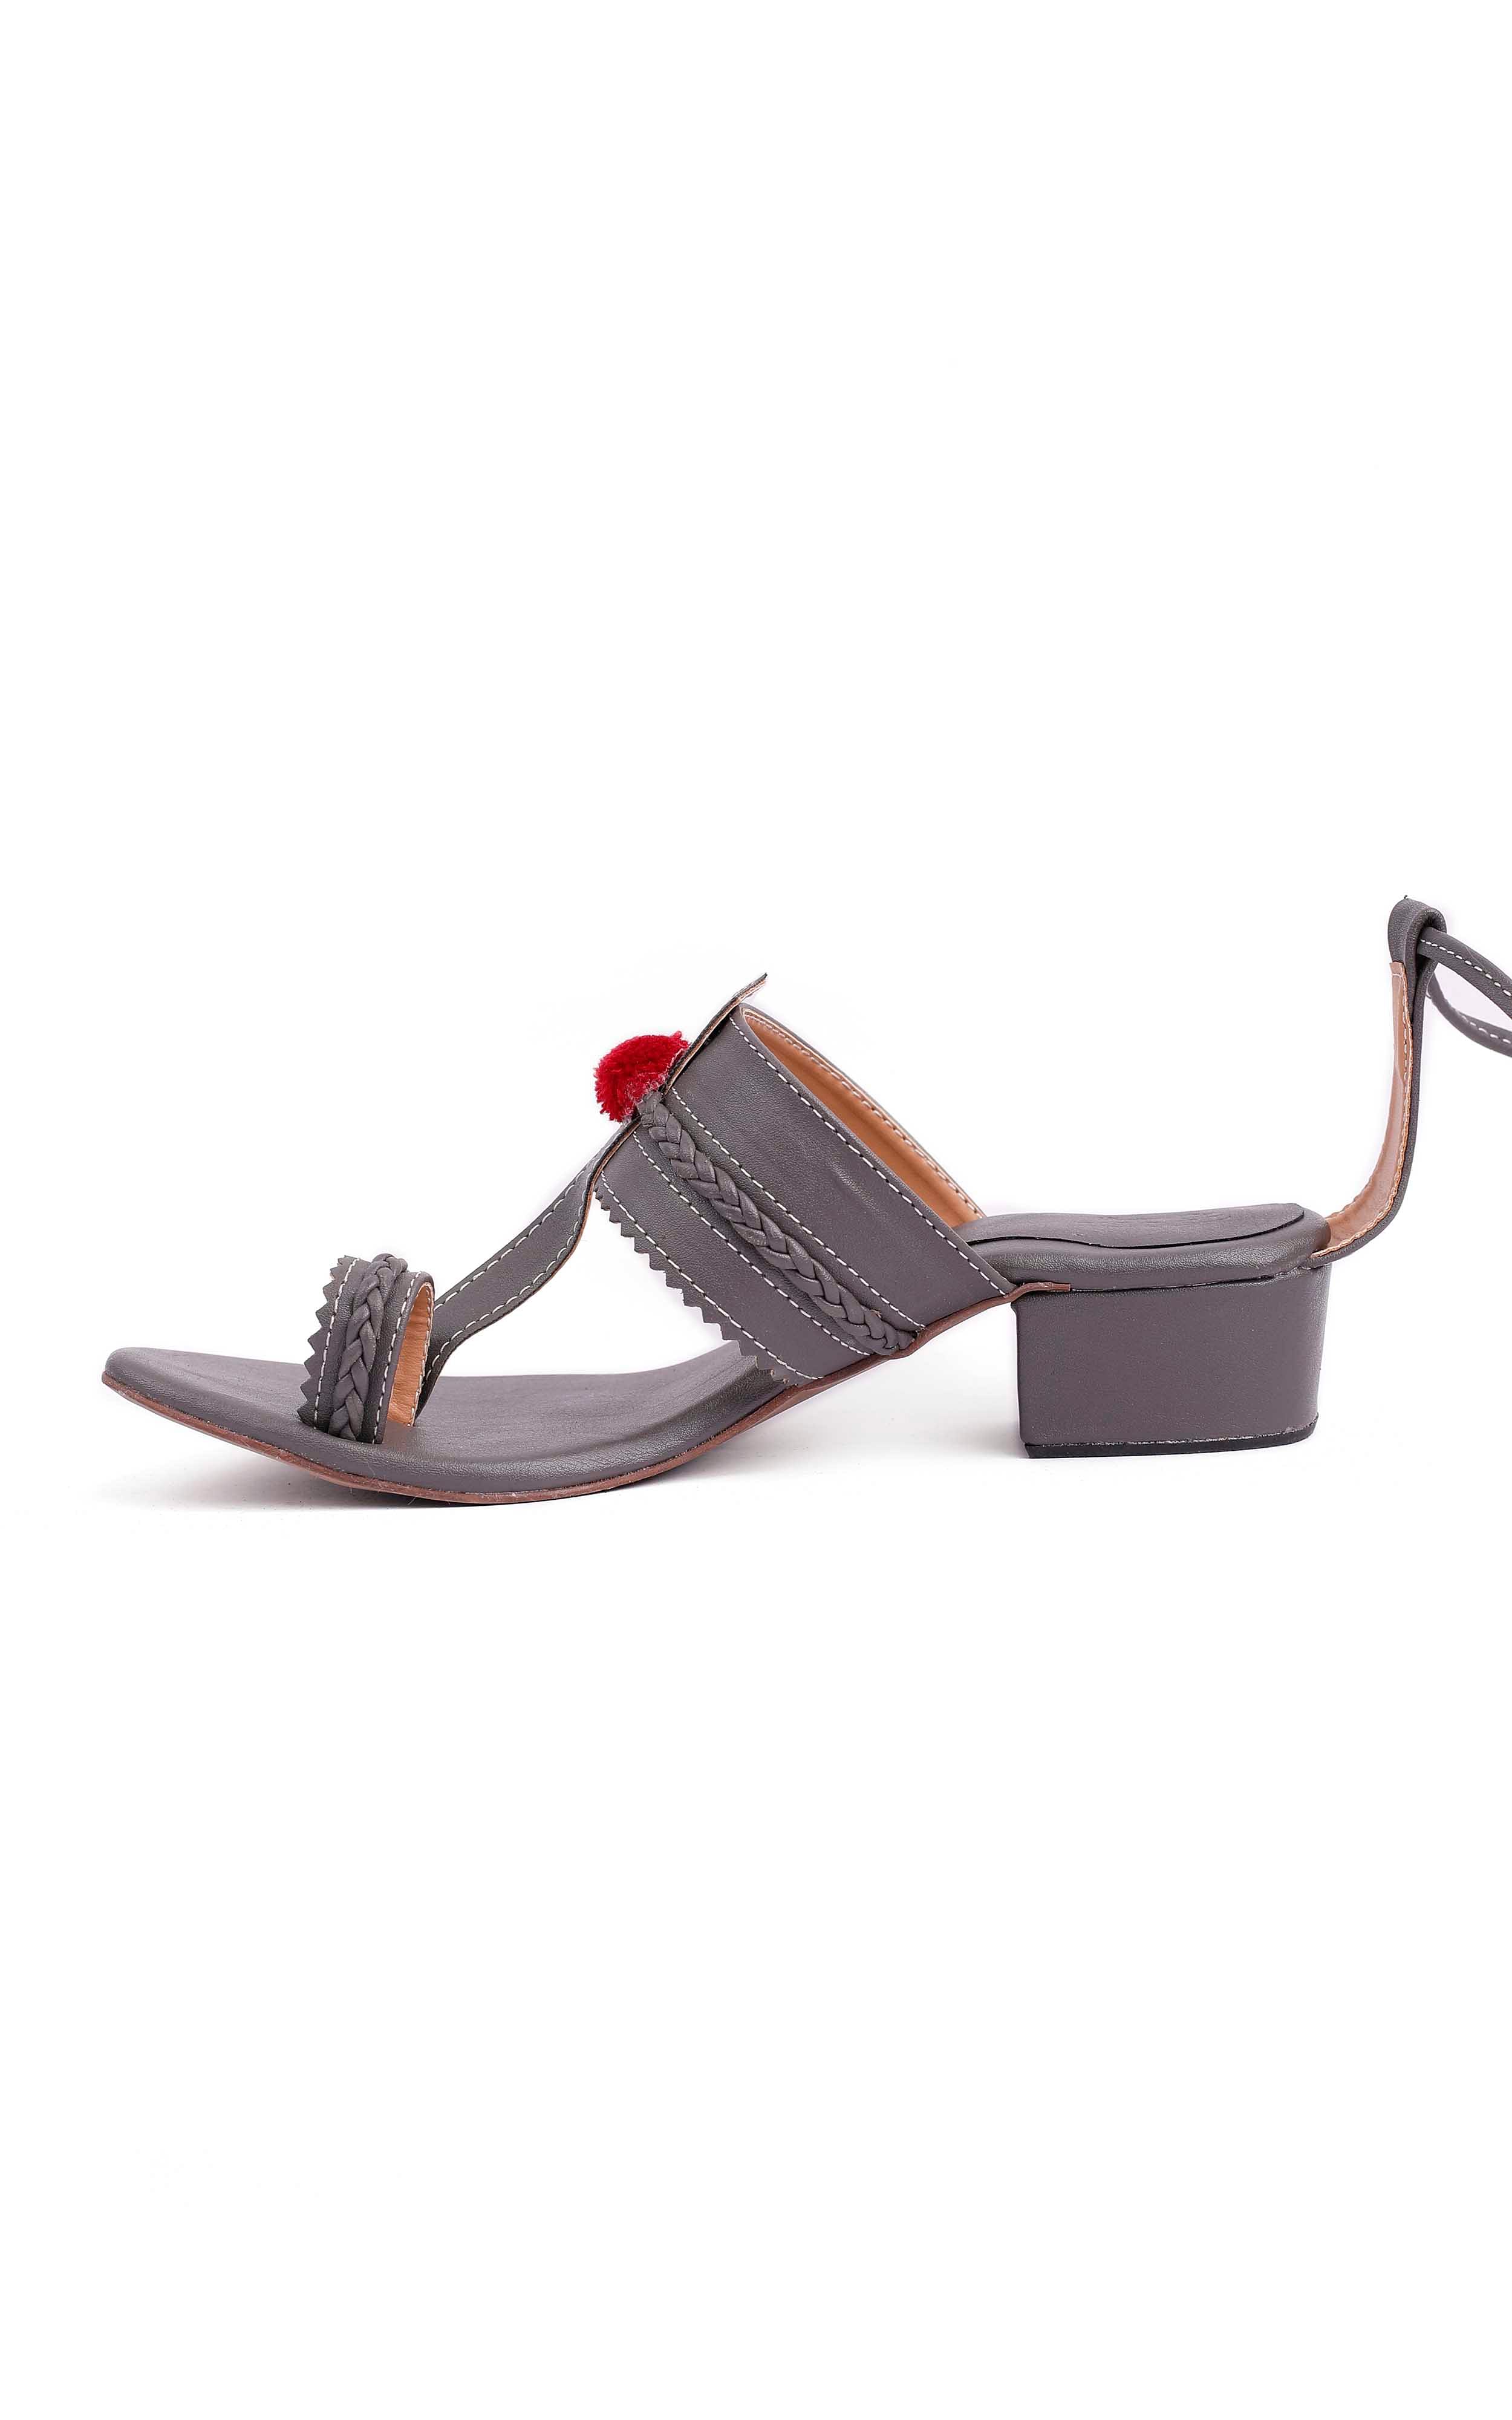 Heeled sandal - blue 1-1-28226-20-880: Buy Tamaris Sandals online!